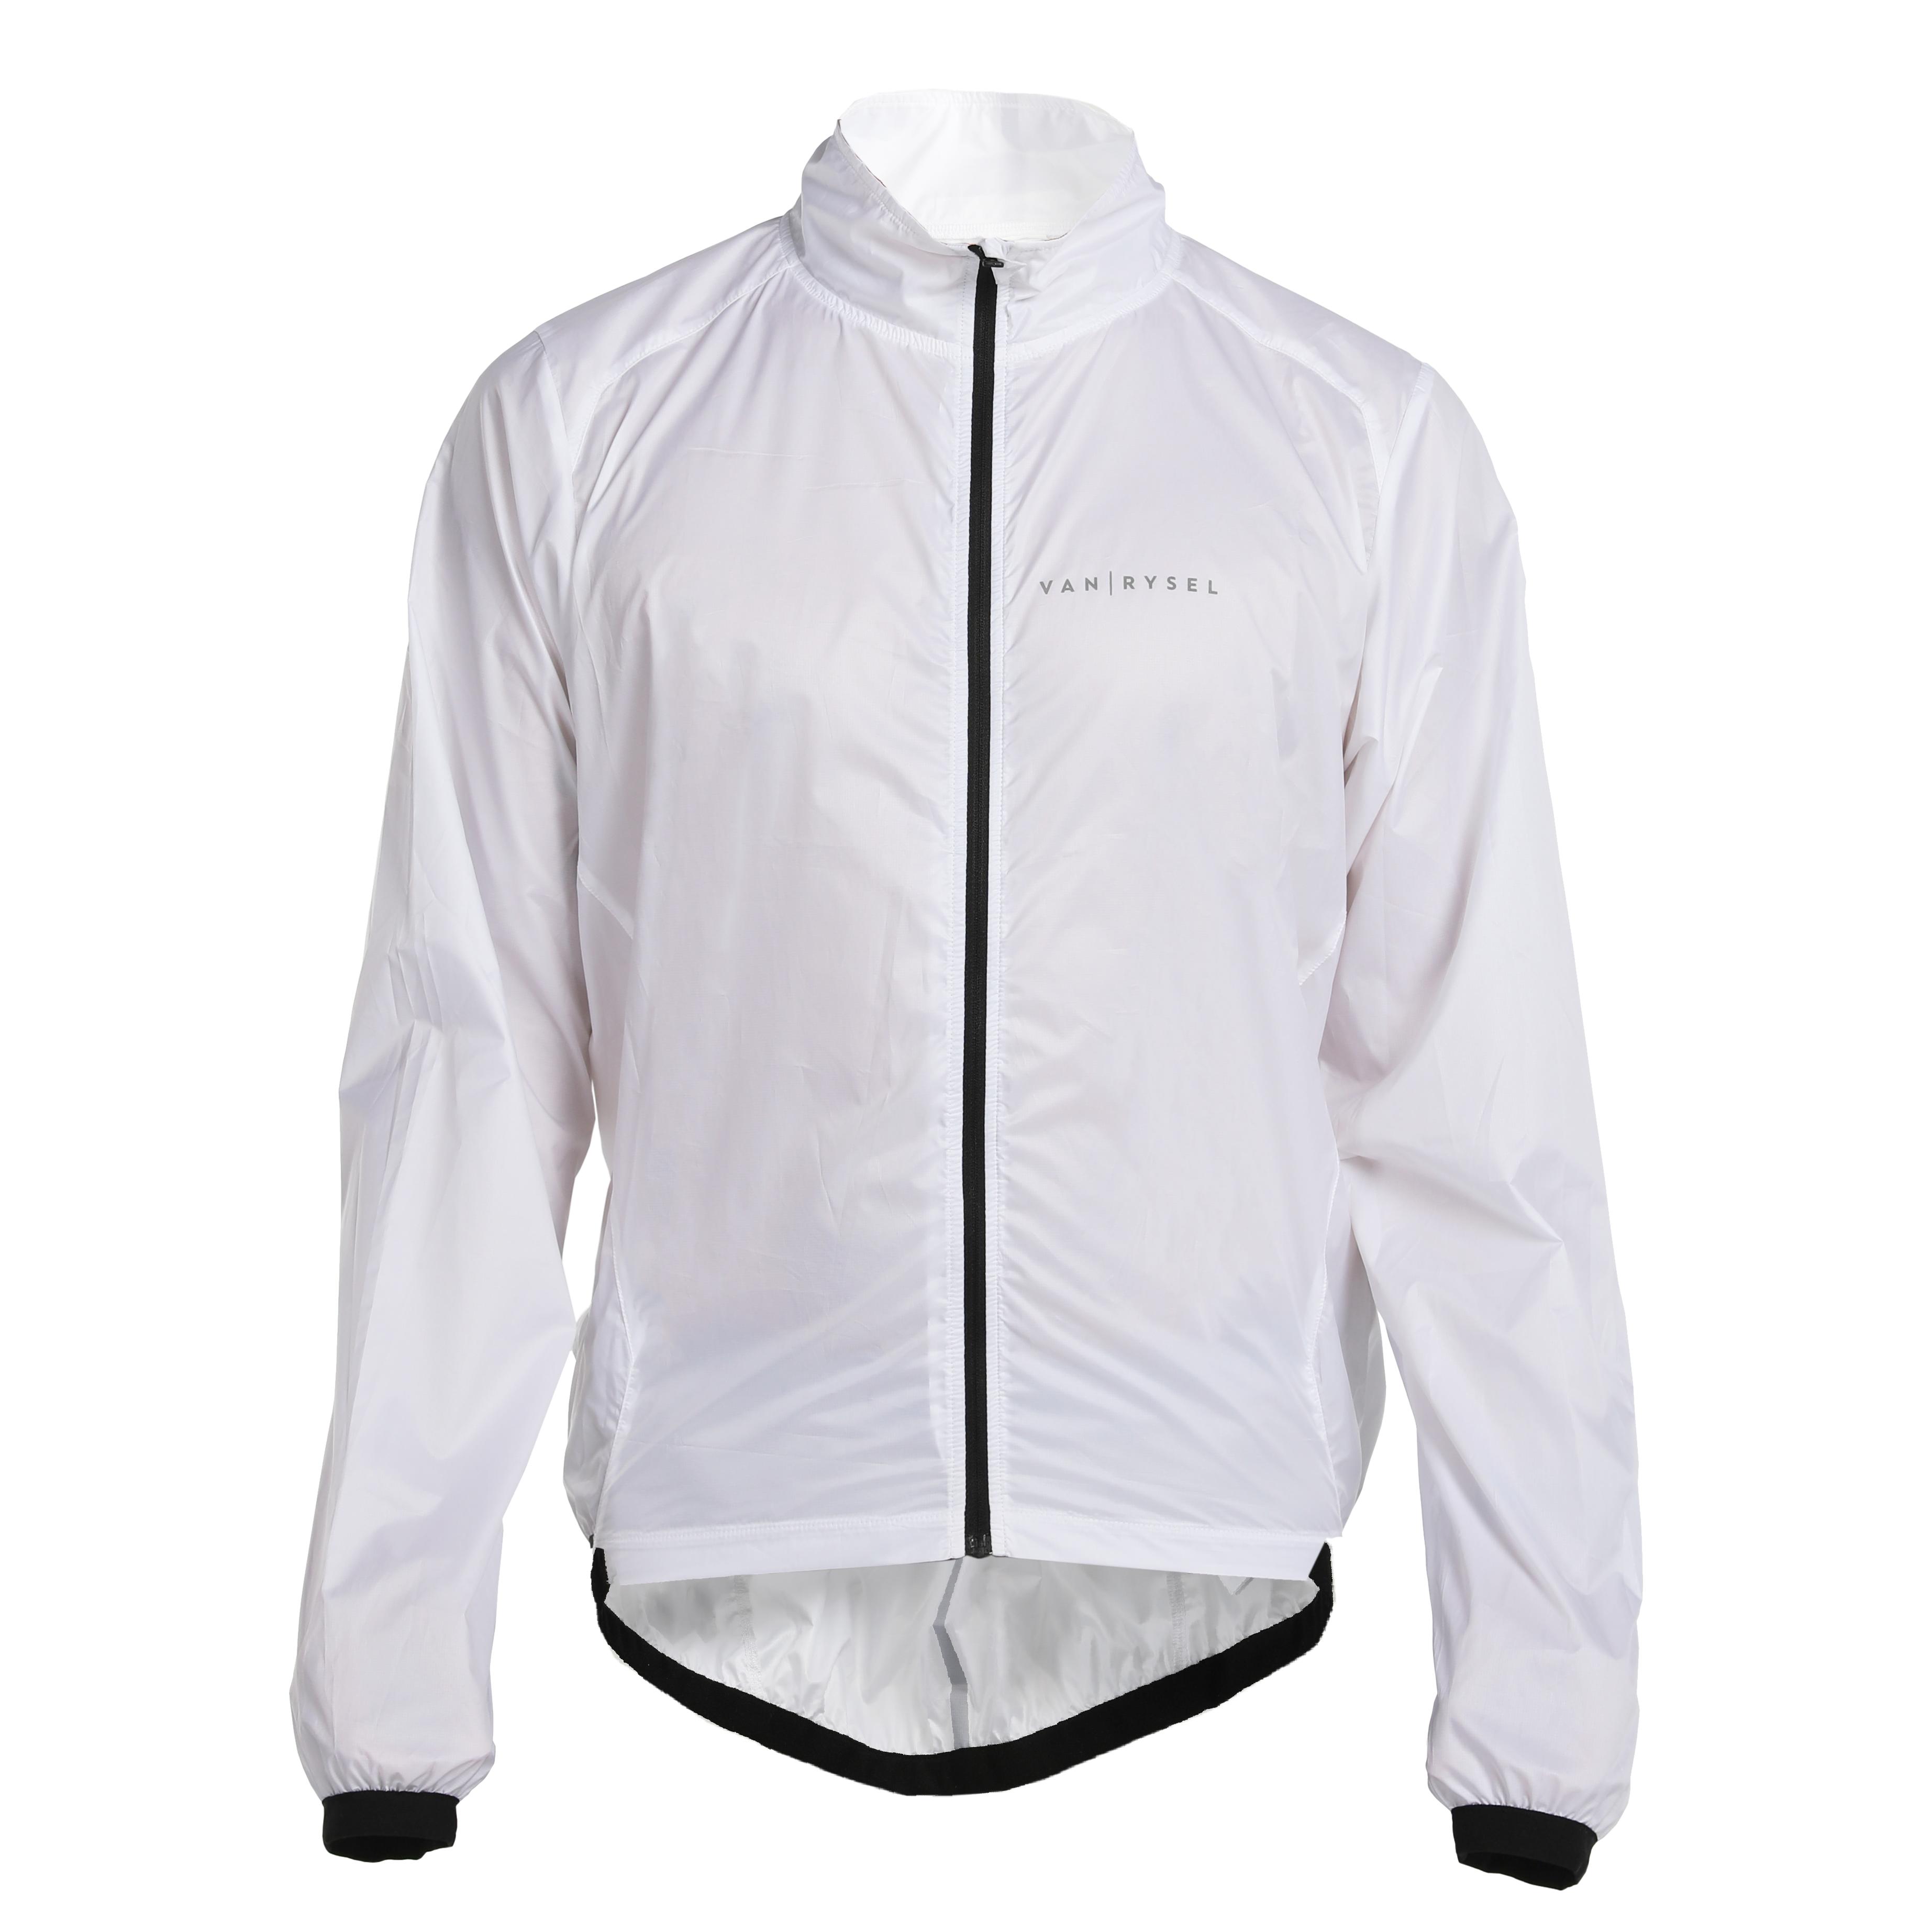 Outdoor Active Cycling Running Skin Coat Super Lightweight and Visible J.CARP Women's Packable Windbreaker Jacket 